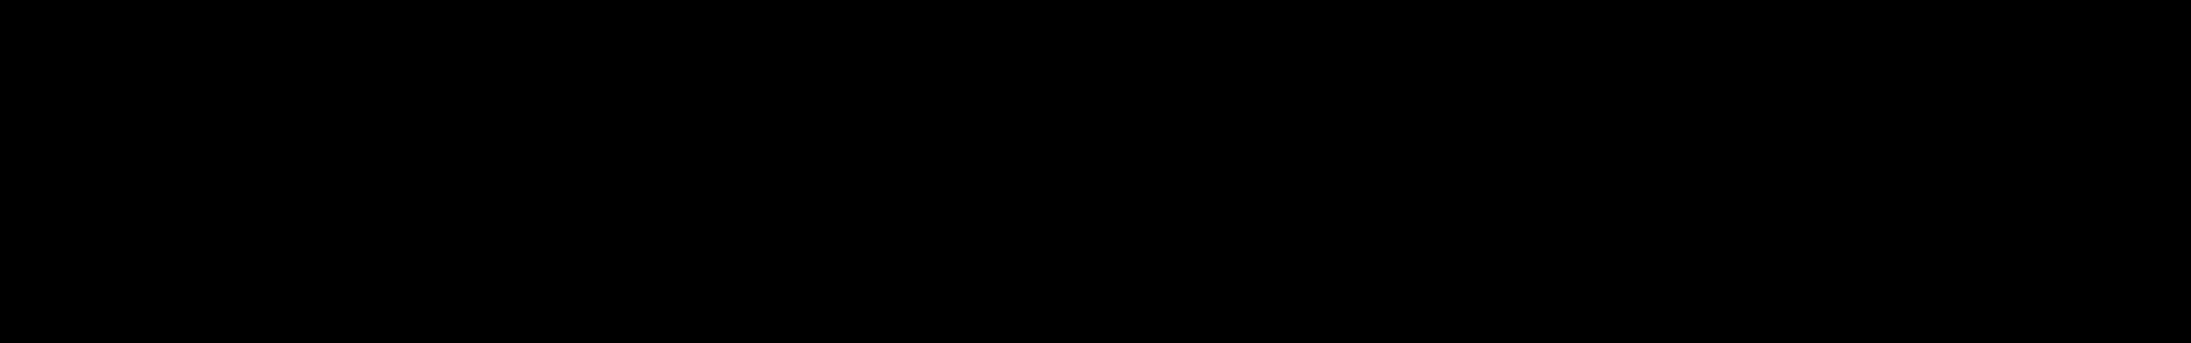 Univision Network Logo Black Background